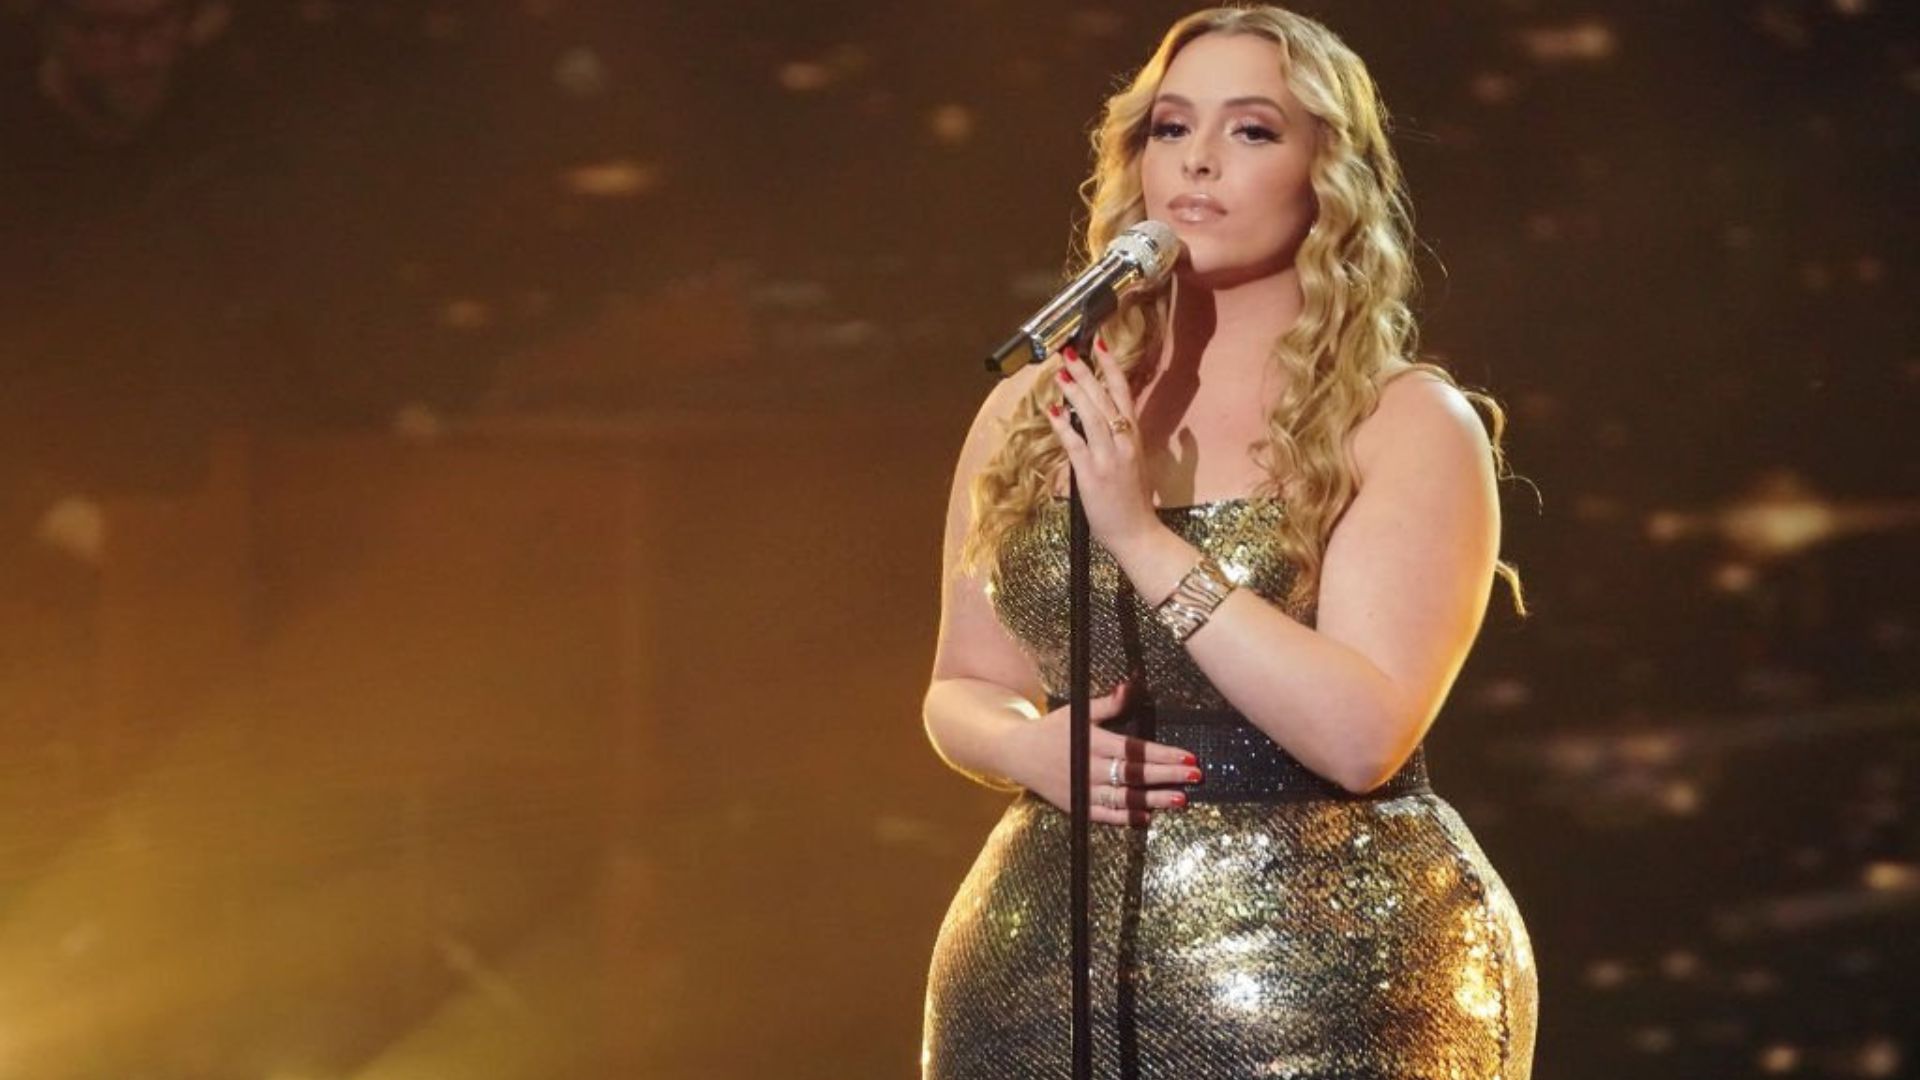 Grace Kinstler Weight Loss Surgery & Secret To American Idol’s Hips!